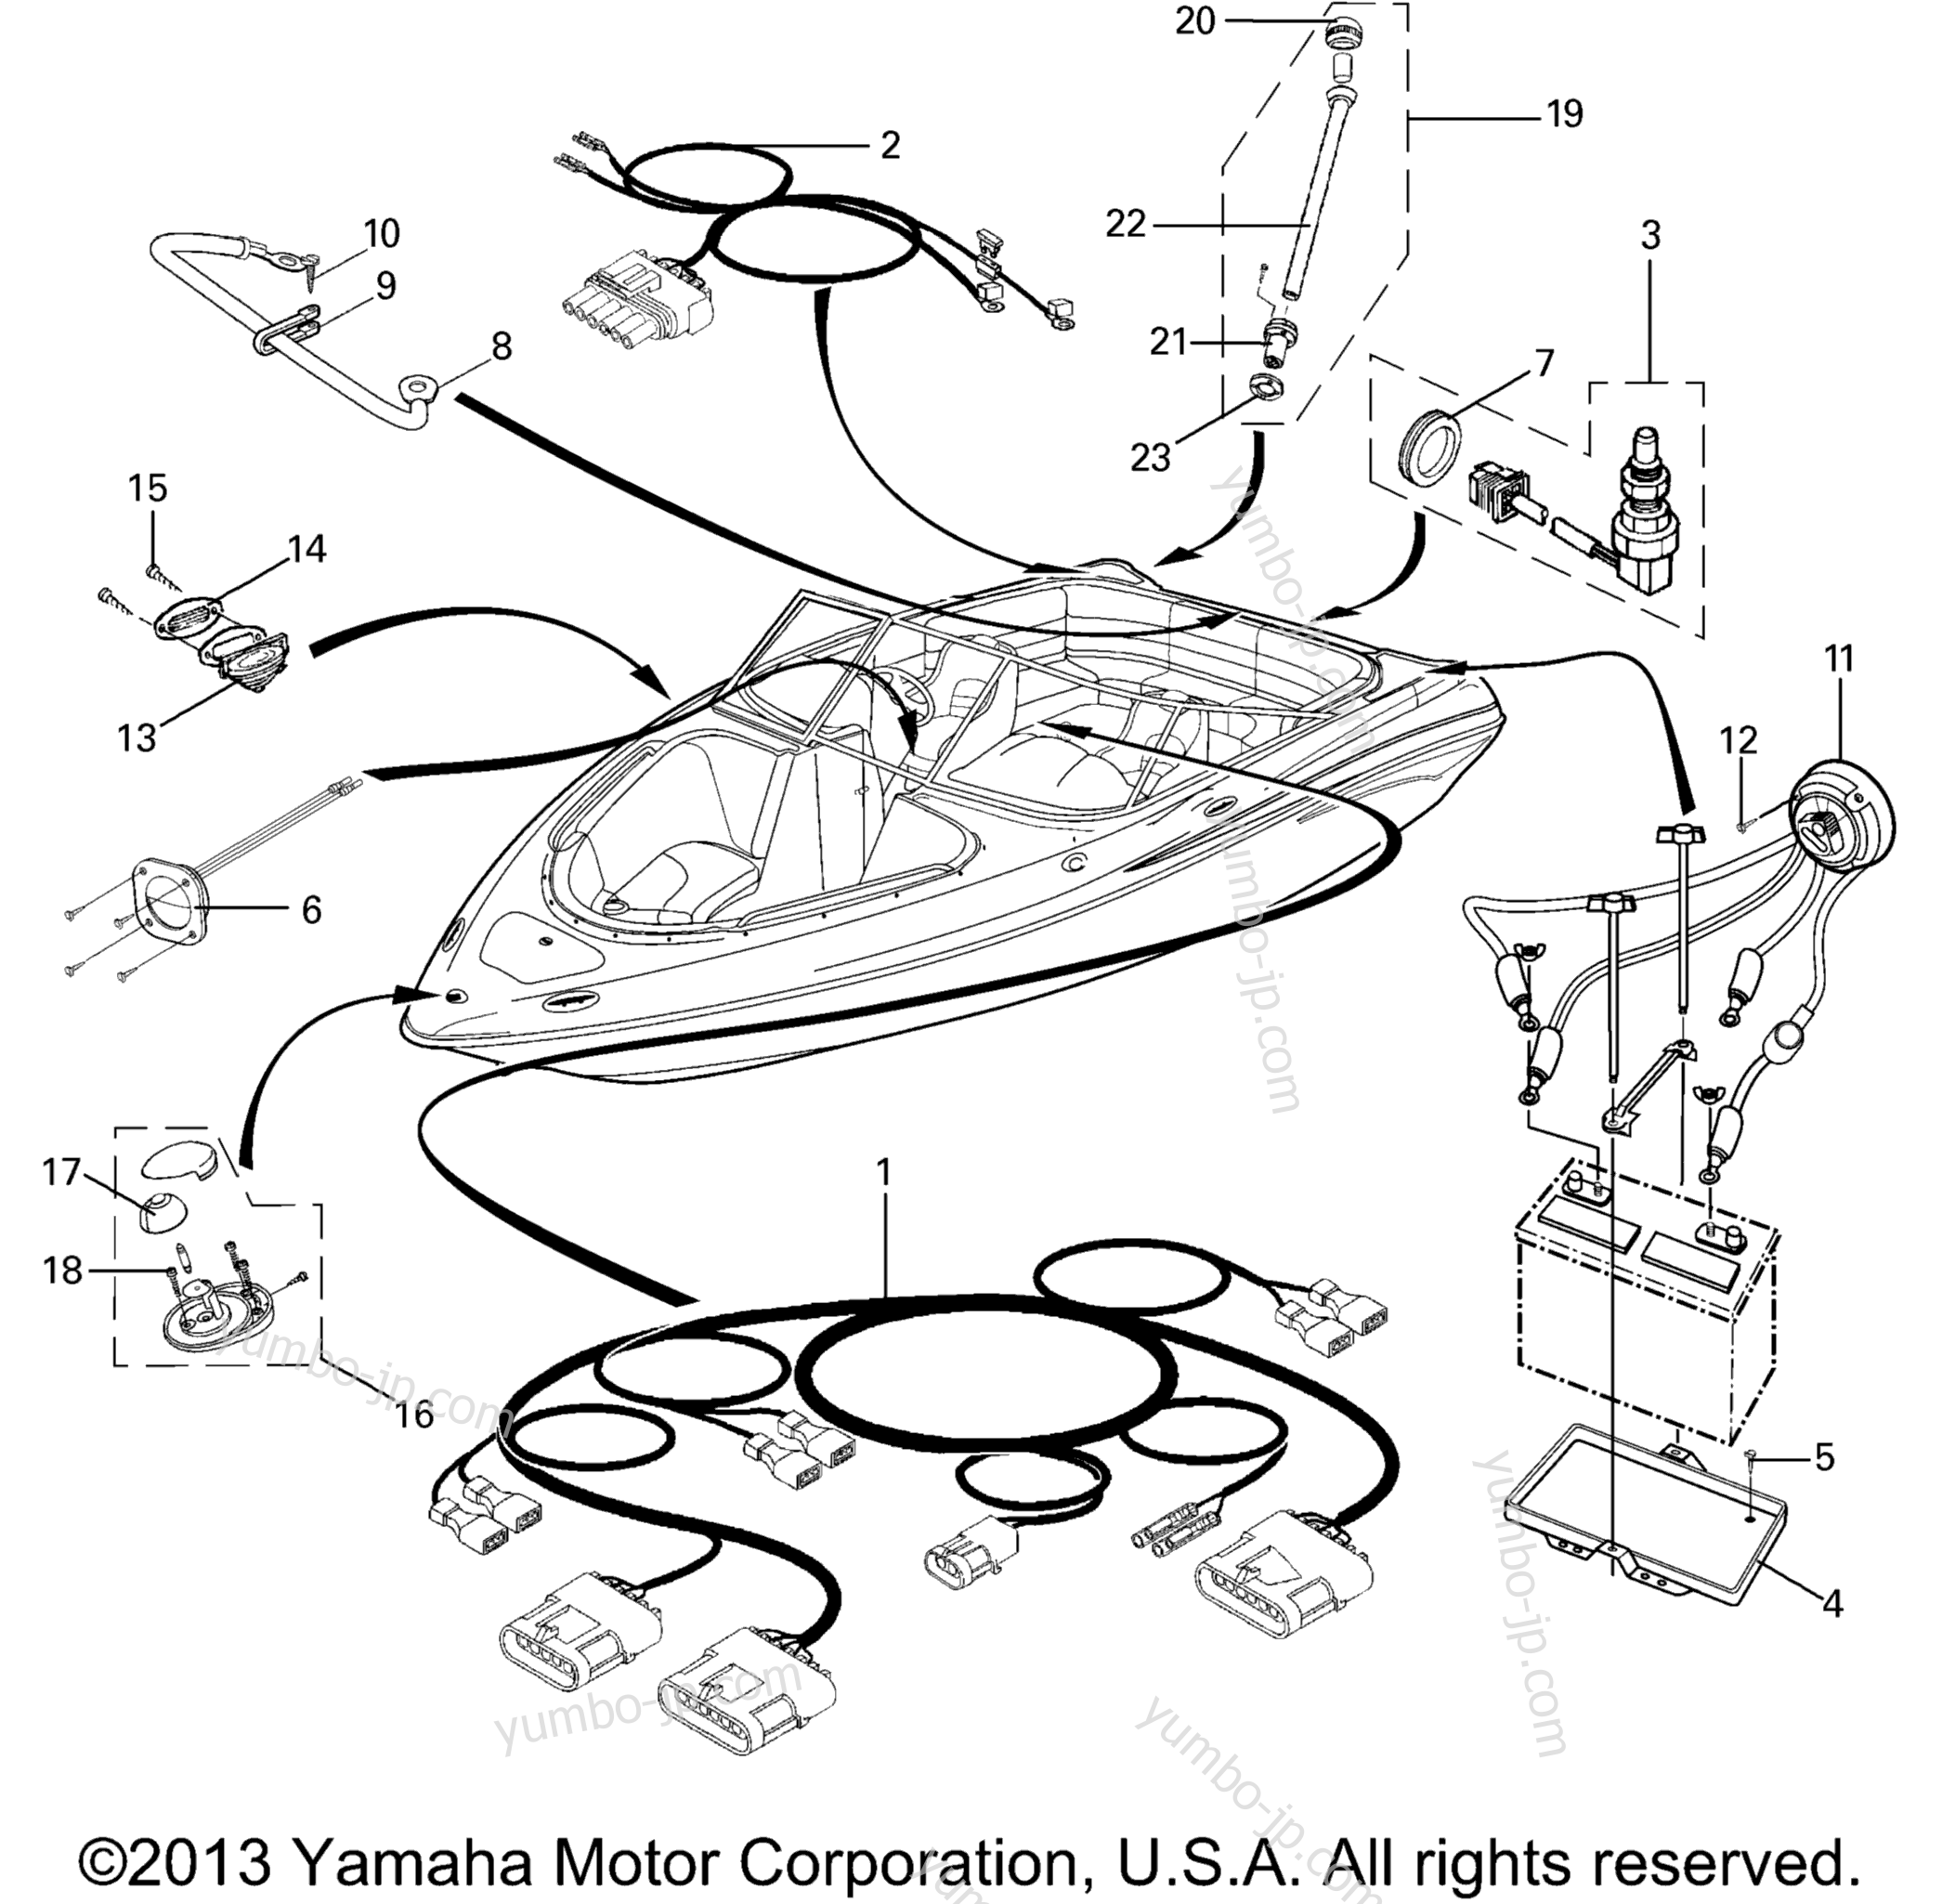 Electrical 3 for boats YAMAHA SR230 (CALIF) (SRT1000CB) CA 2003 year